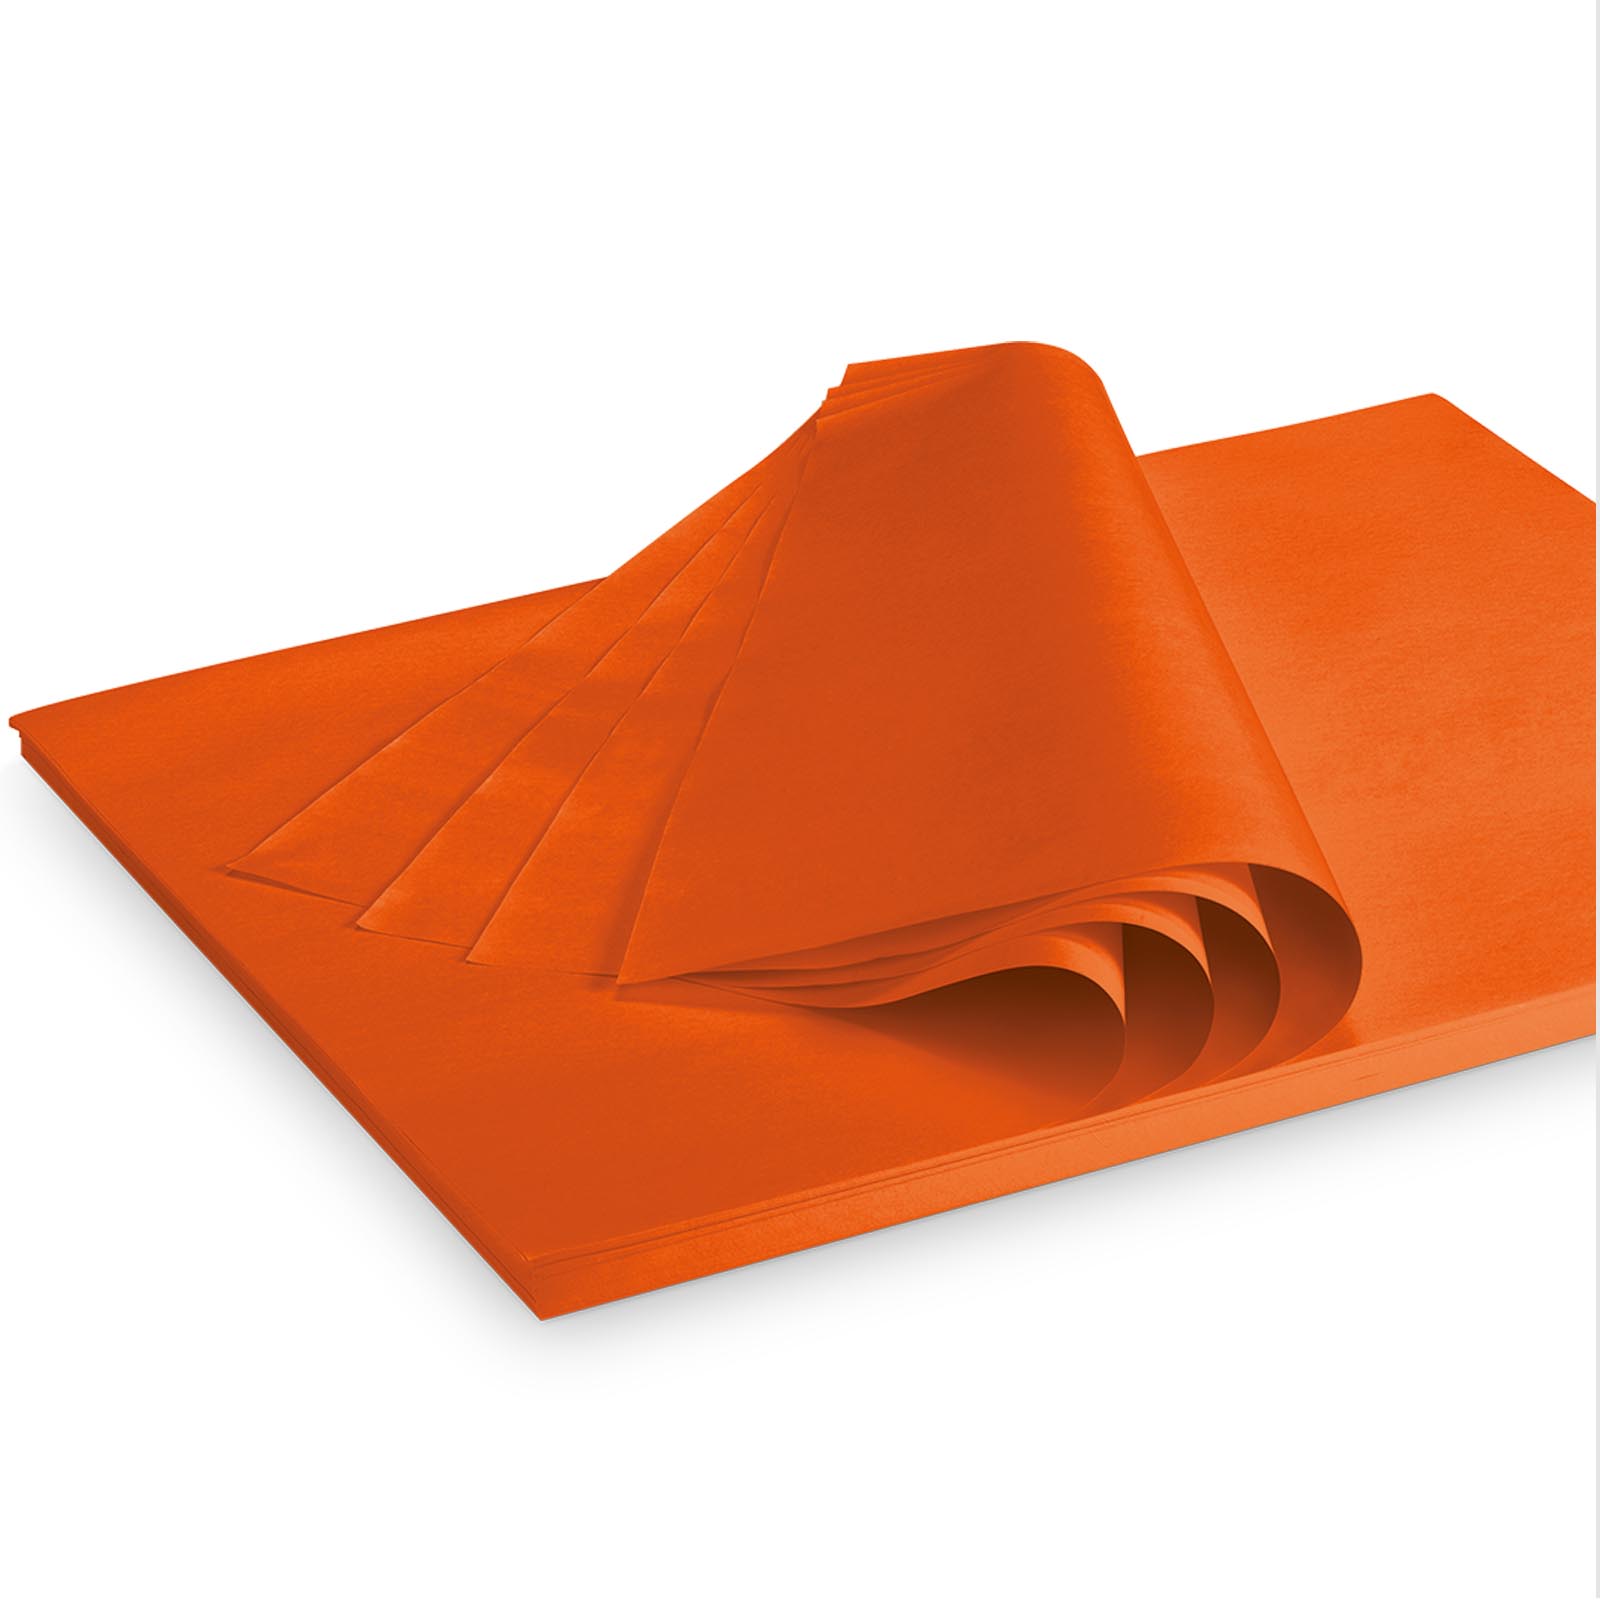 Seidenpapier Orange 35g/qm 500x375mm 2 kg/ ca.300 Blatt